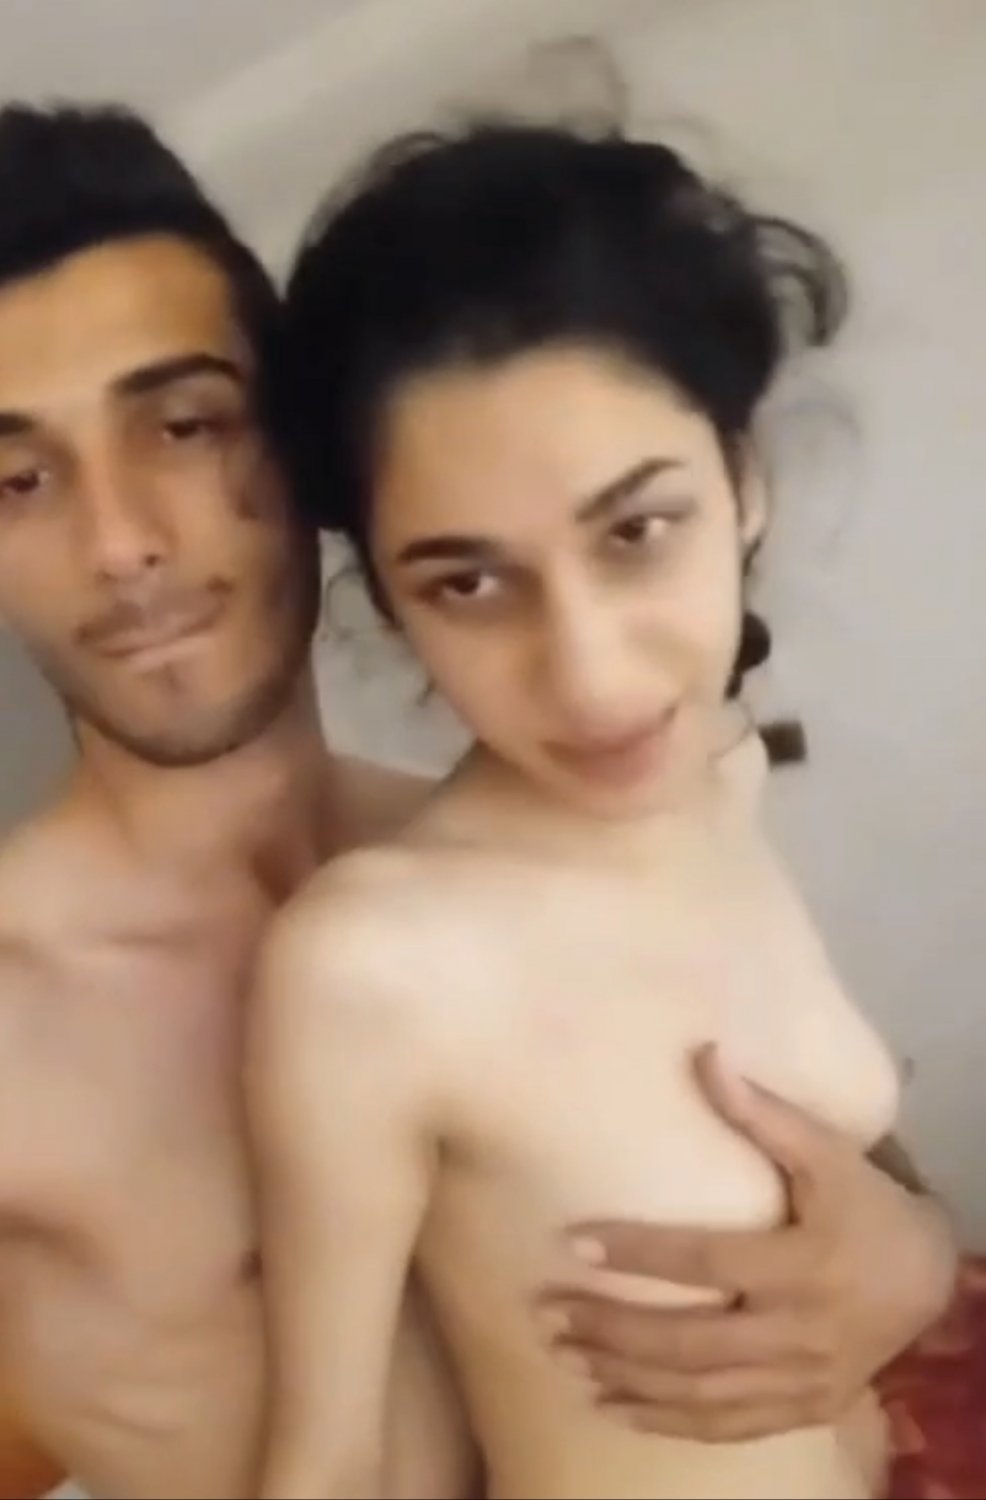 Skinny Persian couple sextape - Porn Videos and Photos